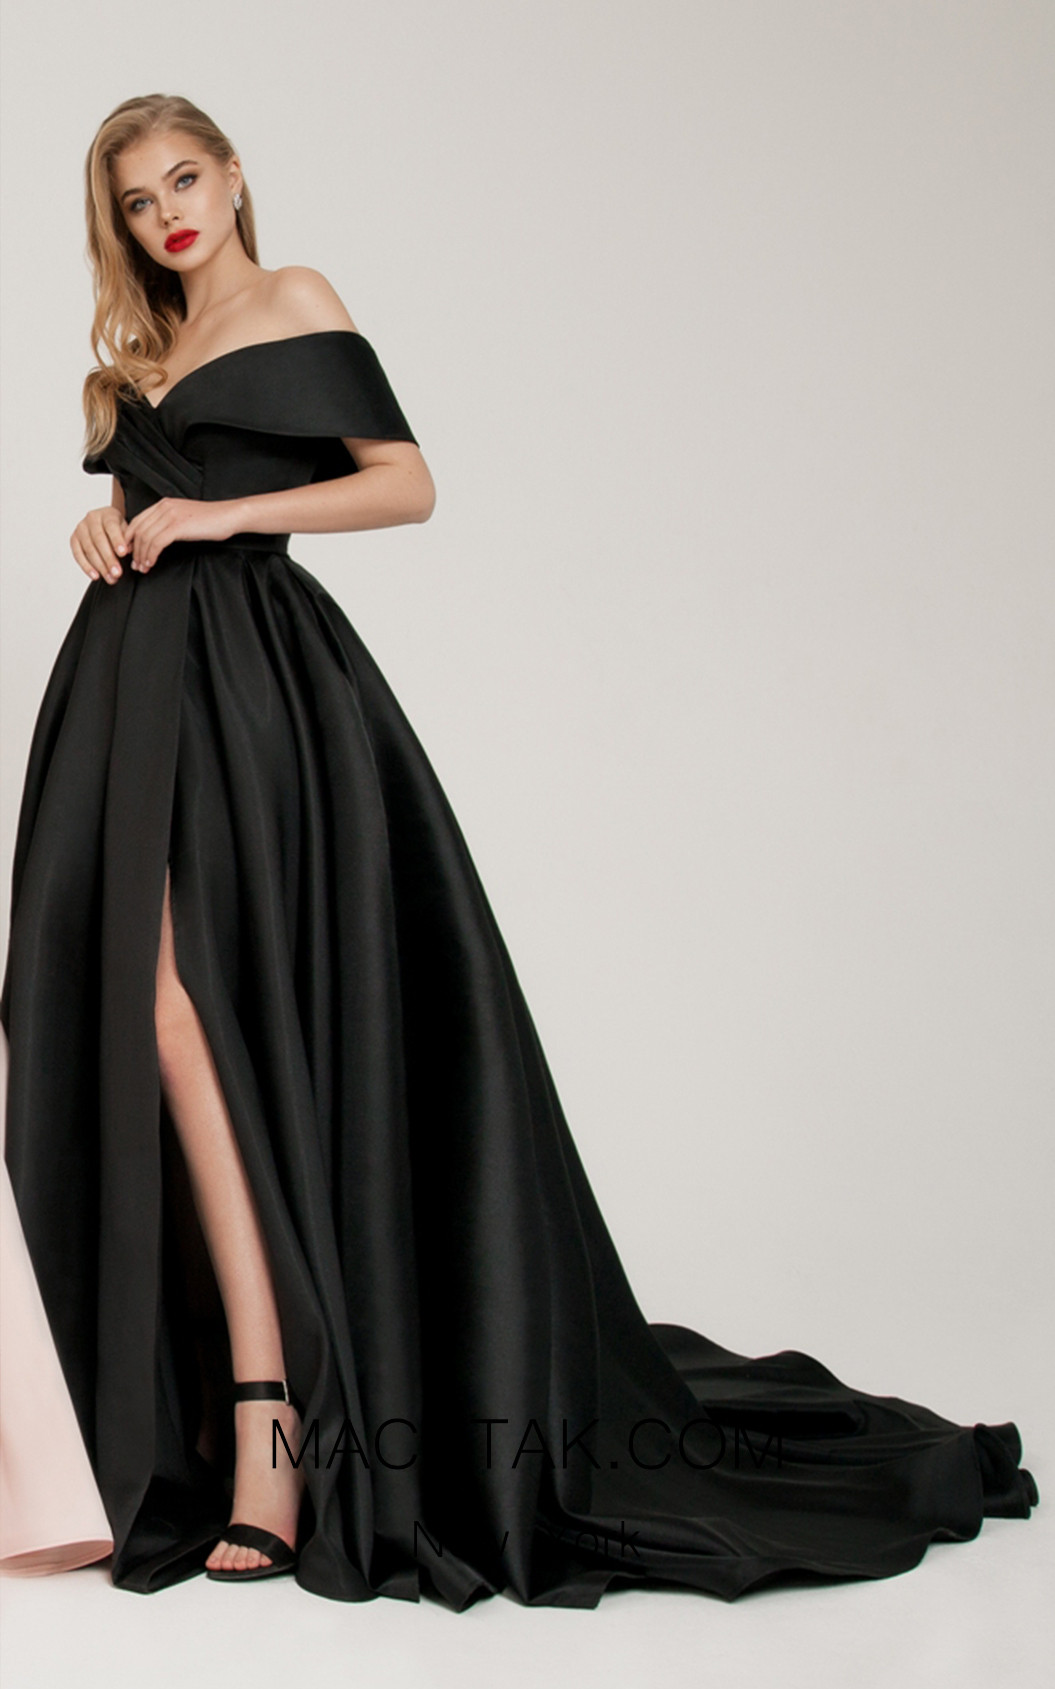 Ricca Sposa Perla Nera Black Front Dress